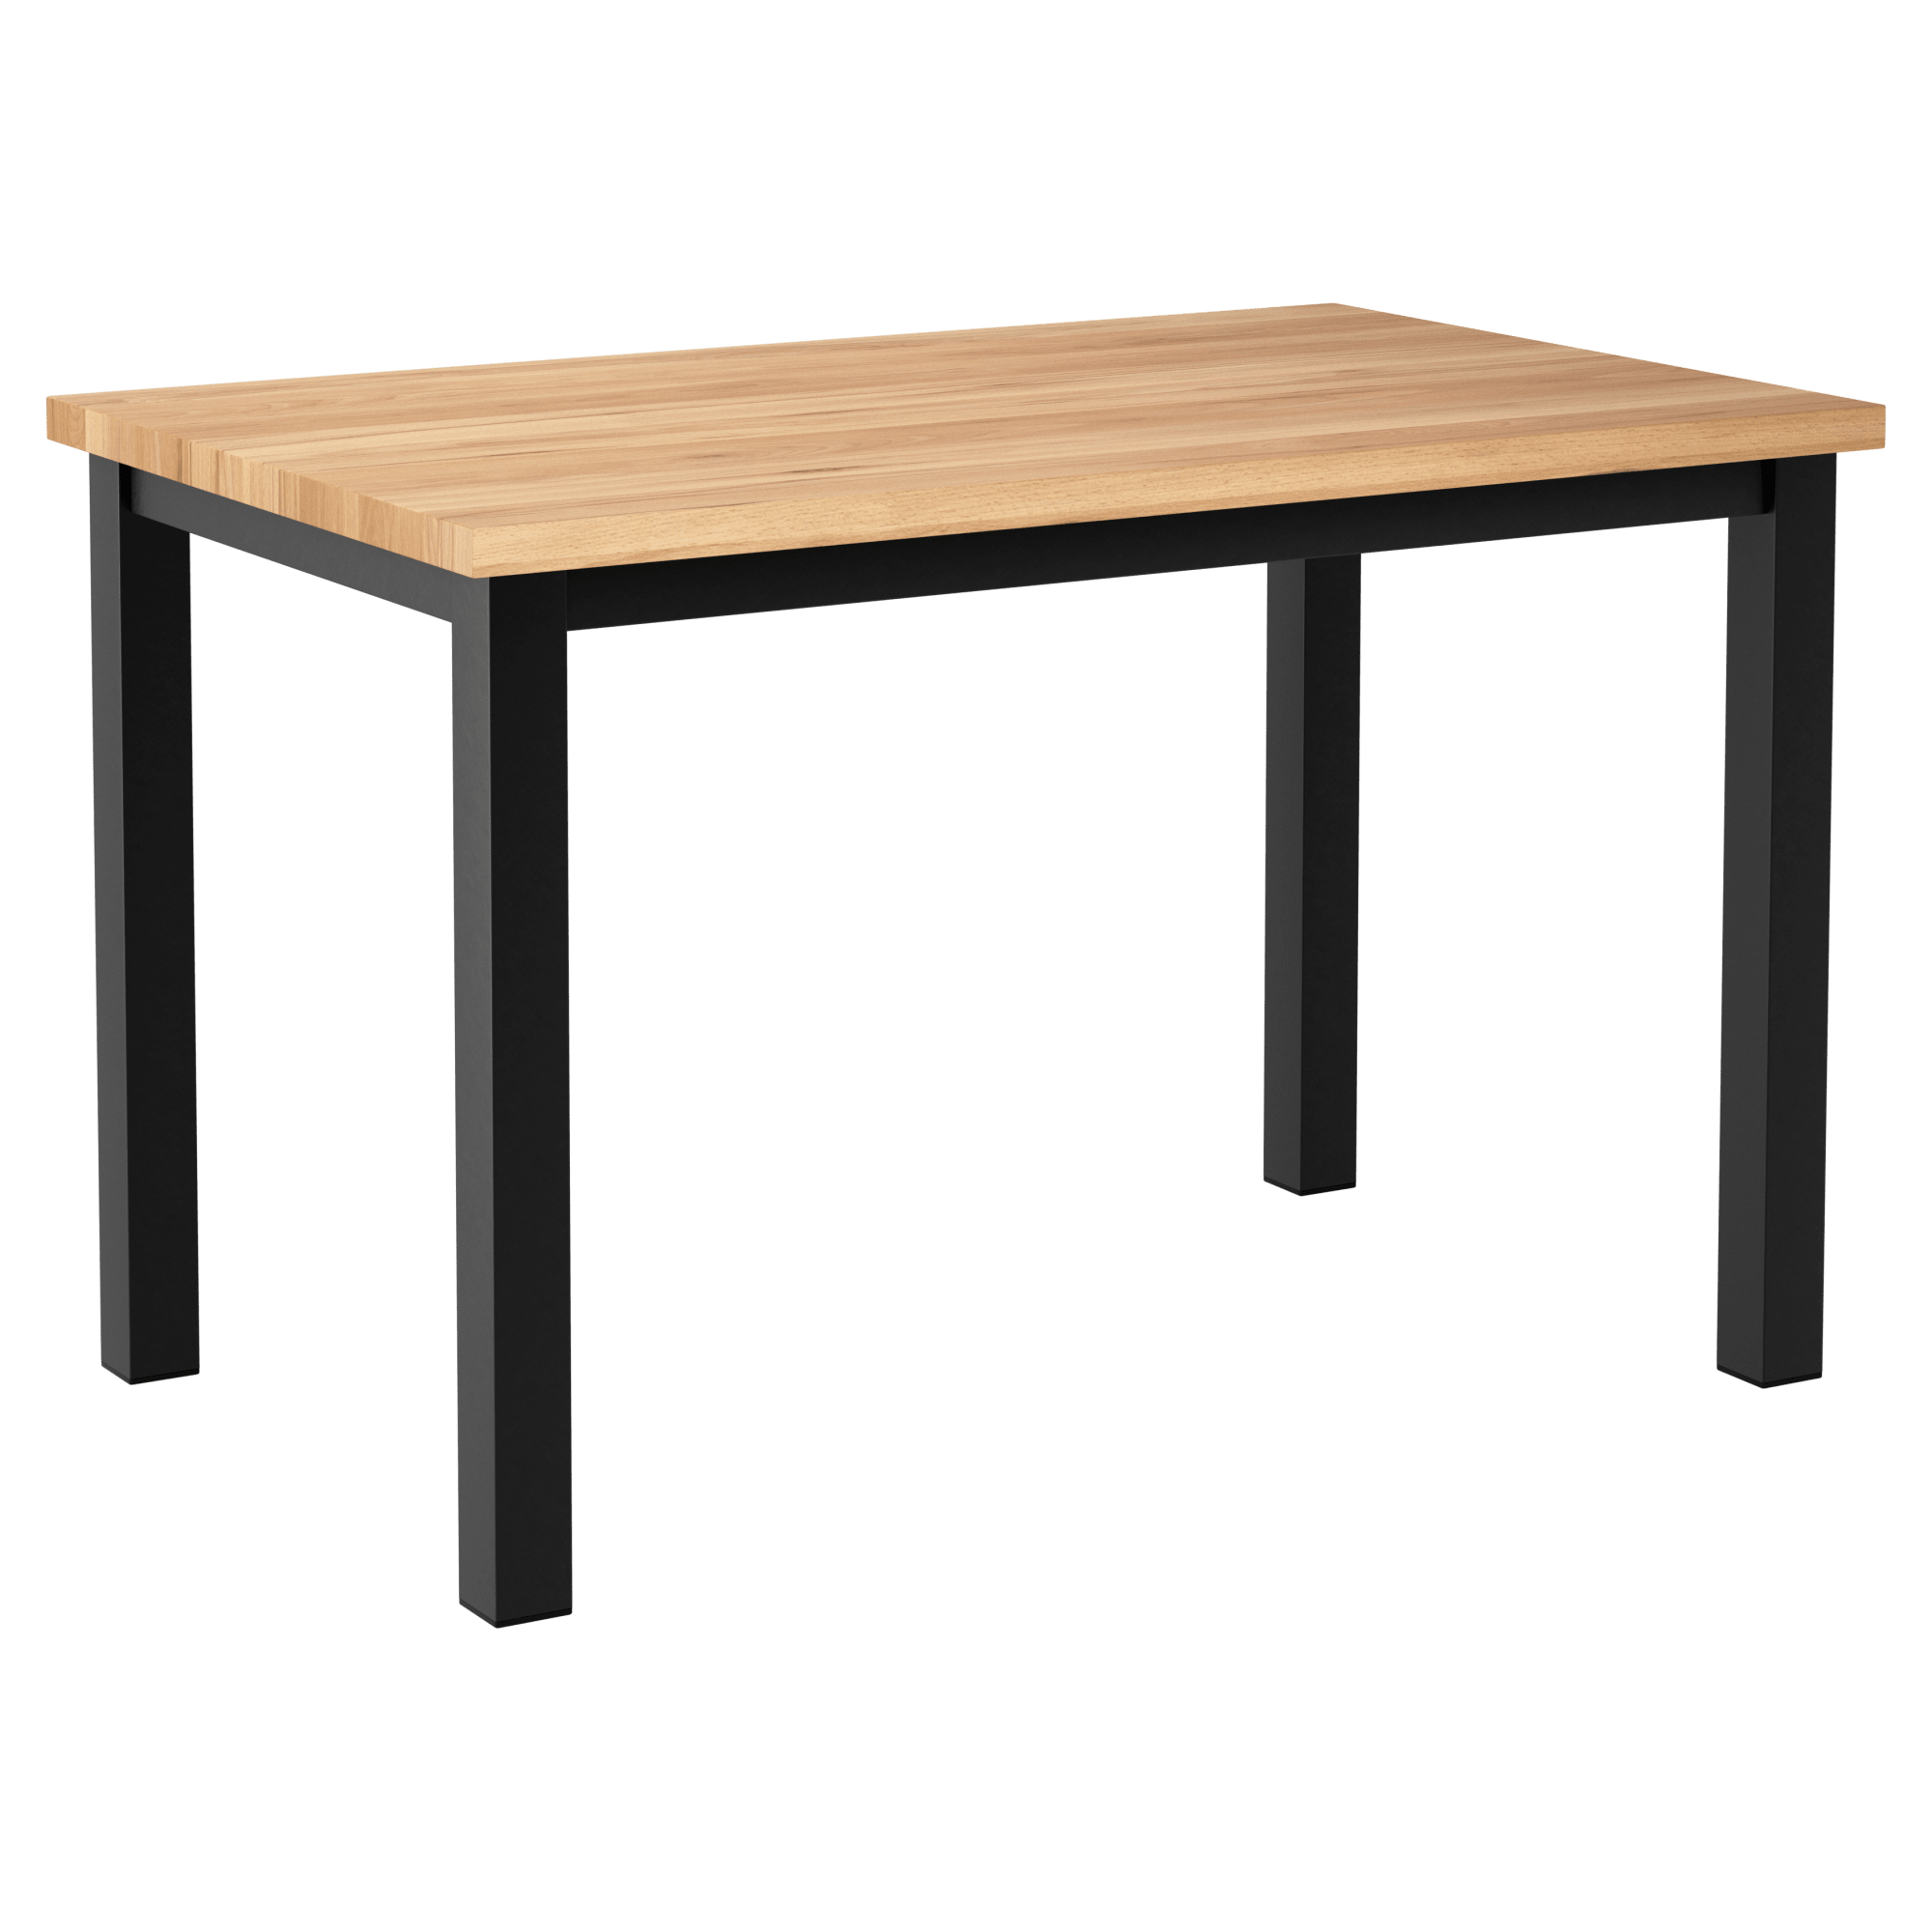 Ottis Table Set in Black Finish